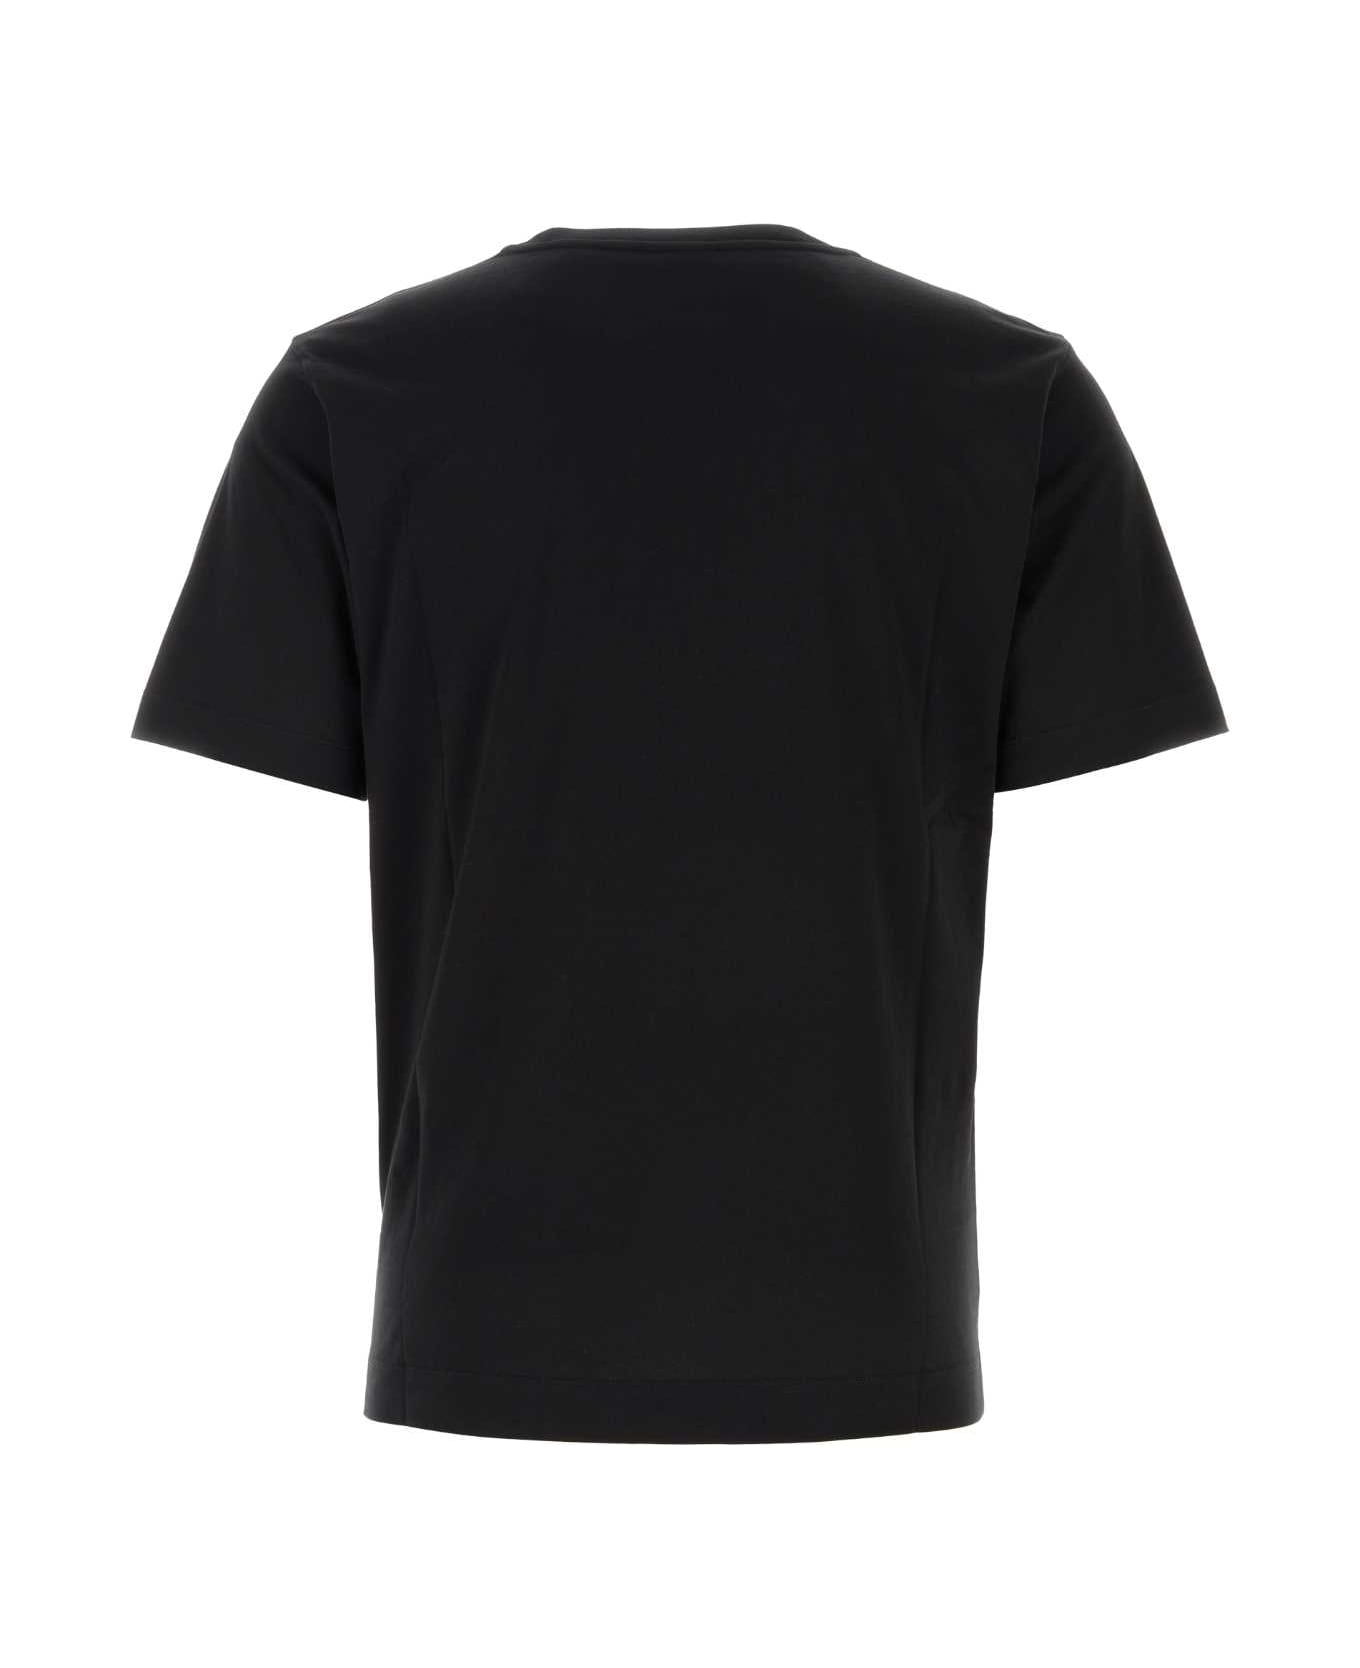 Dries Van Noten Black Cotton T-shirt - BLACK